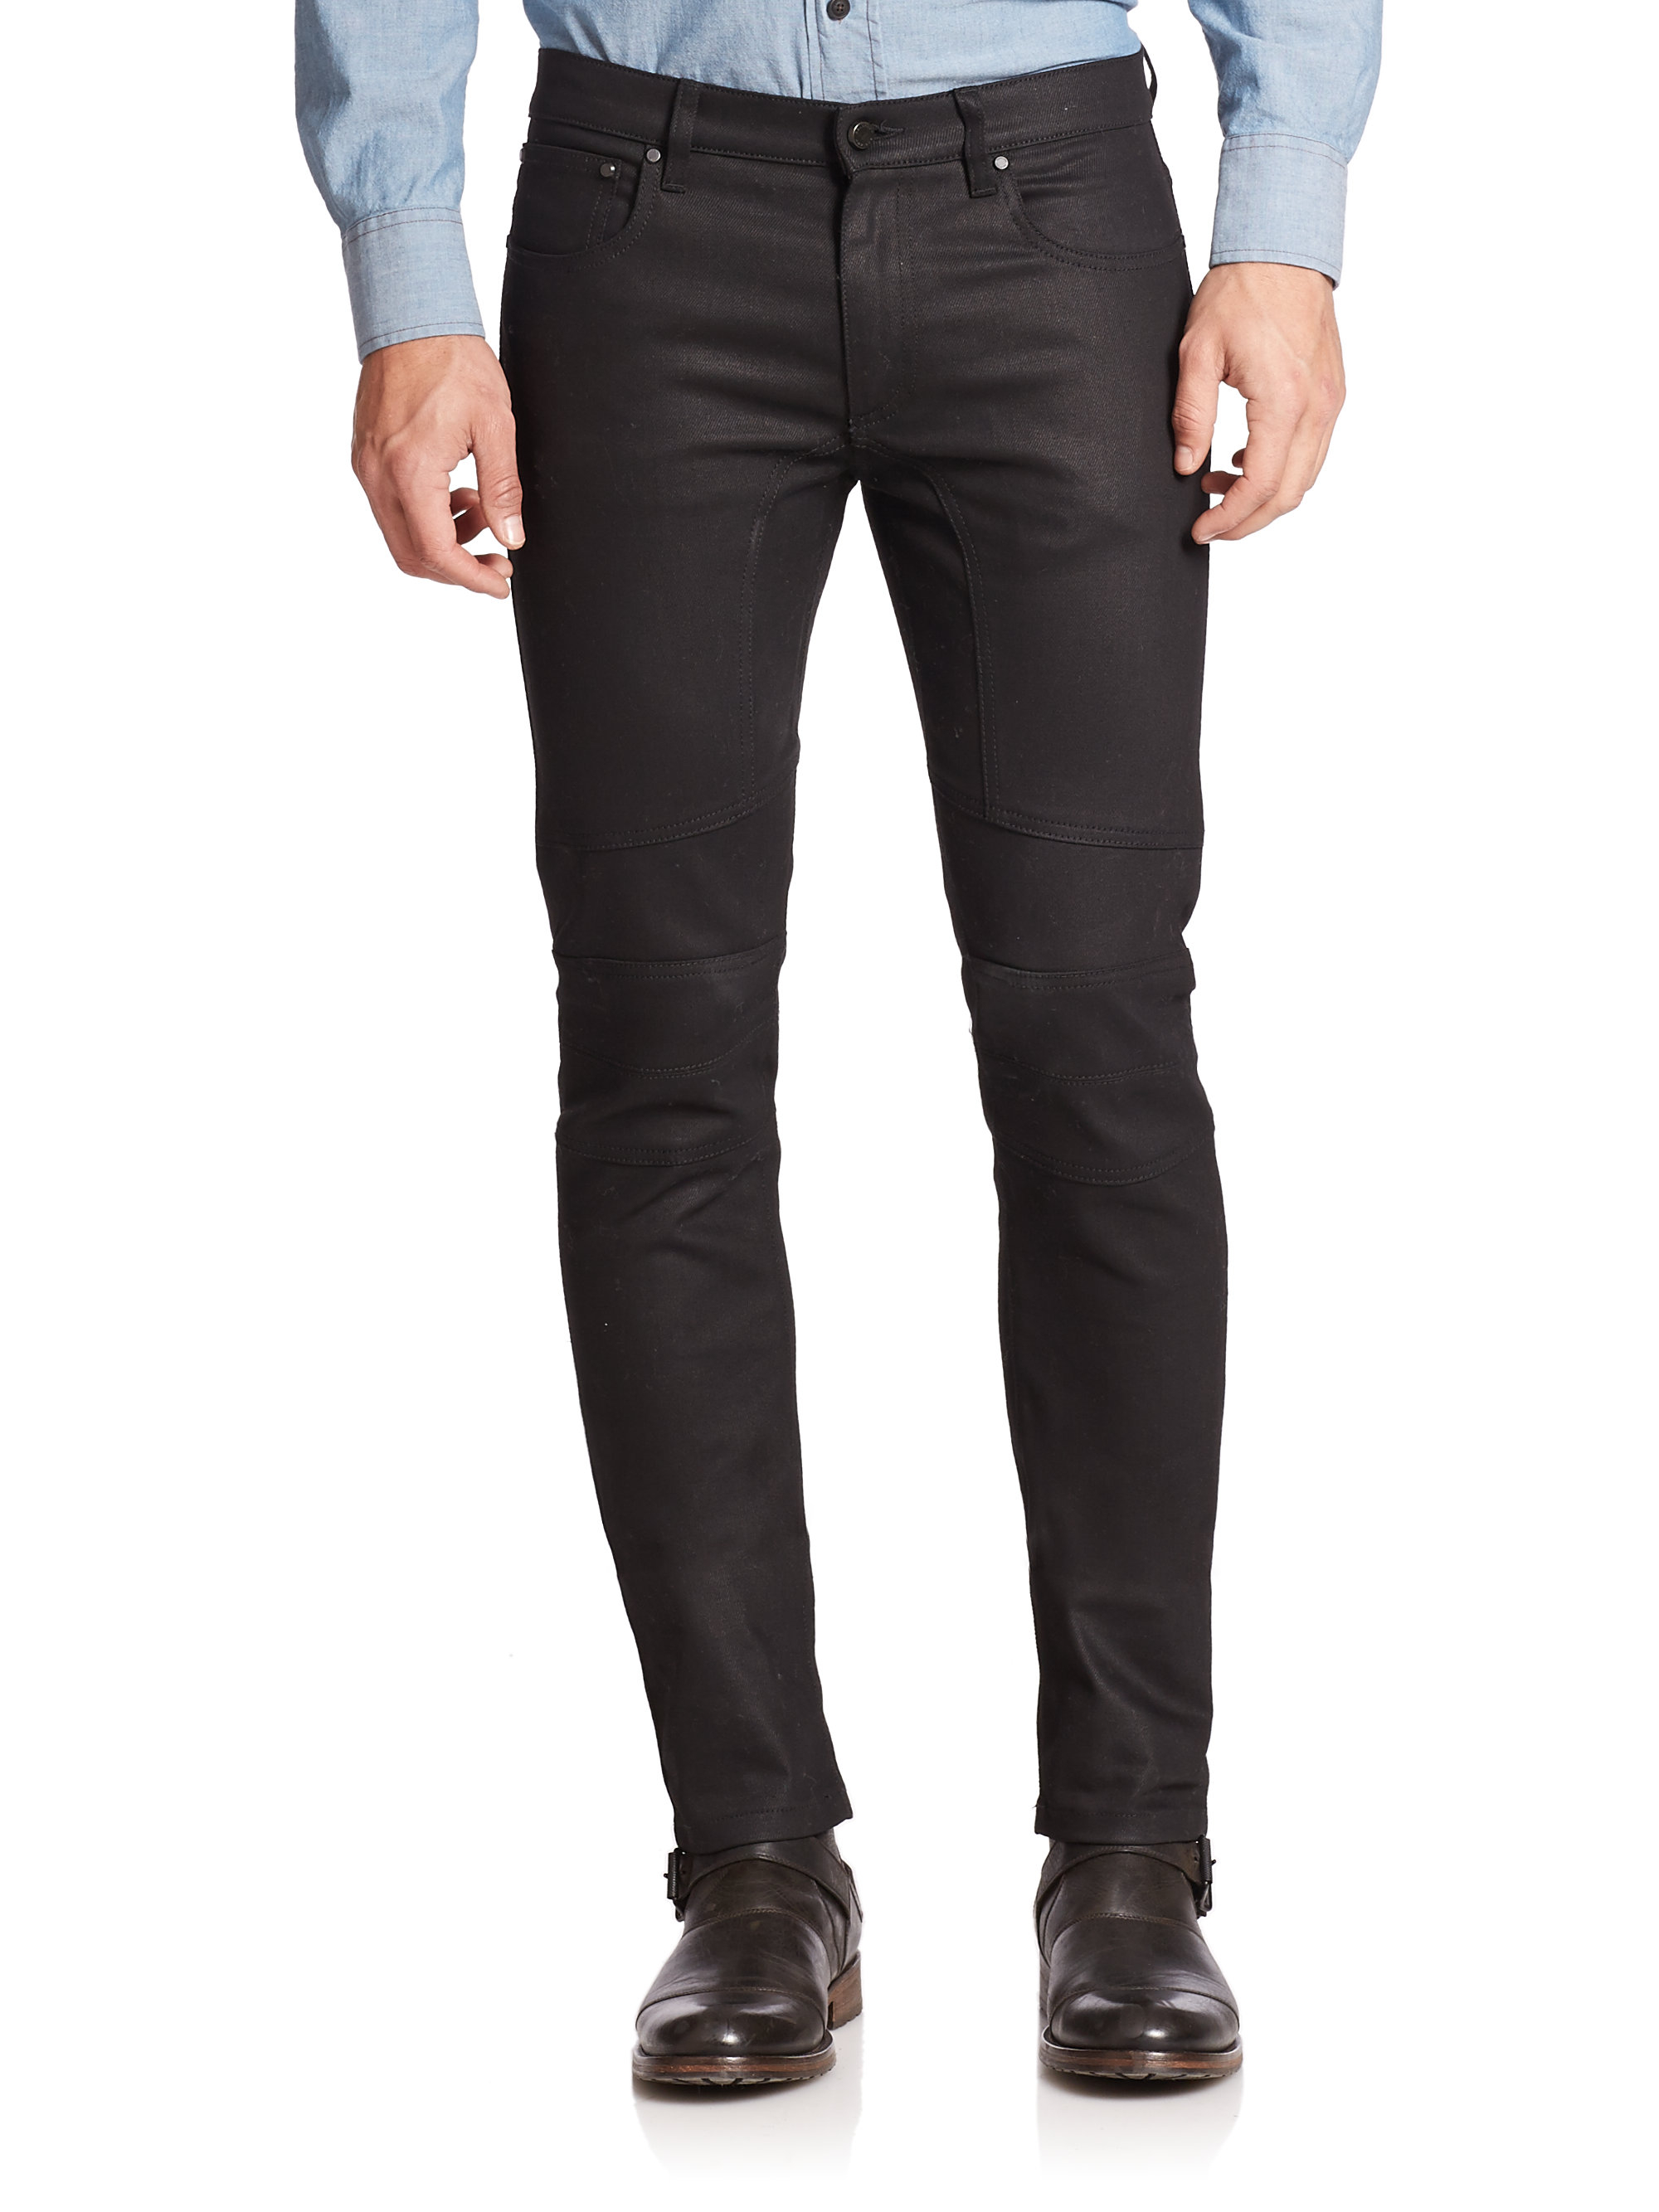 Belstaff Denim Slim-fit Moto Jeans in Black for Men - Lyst